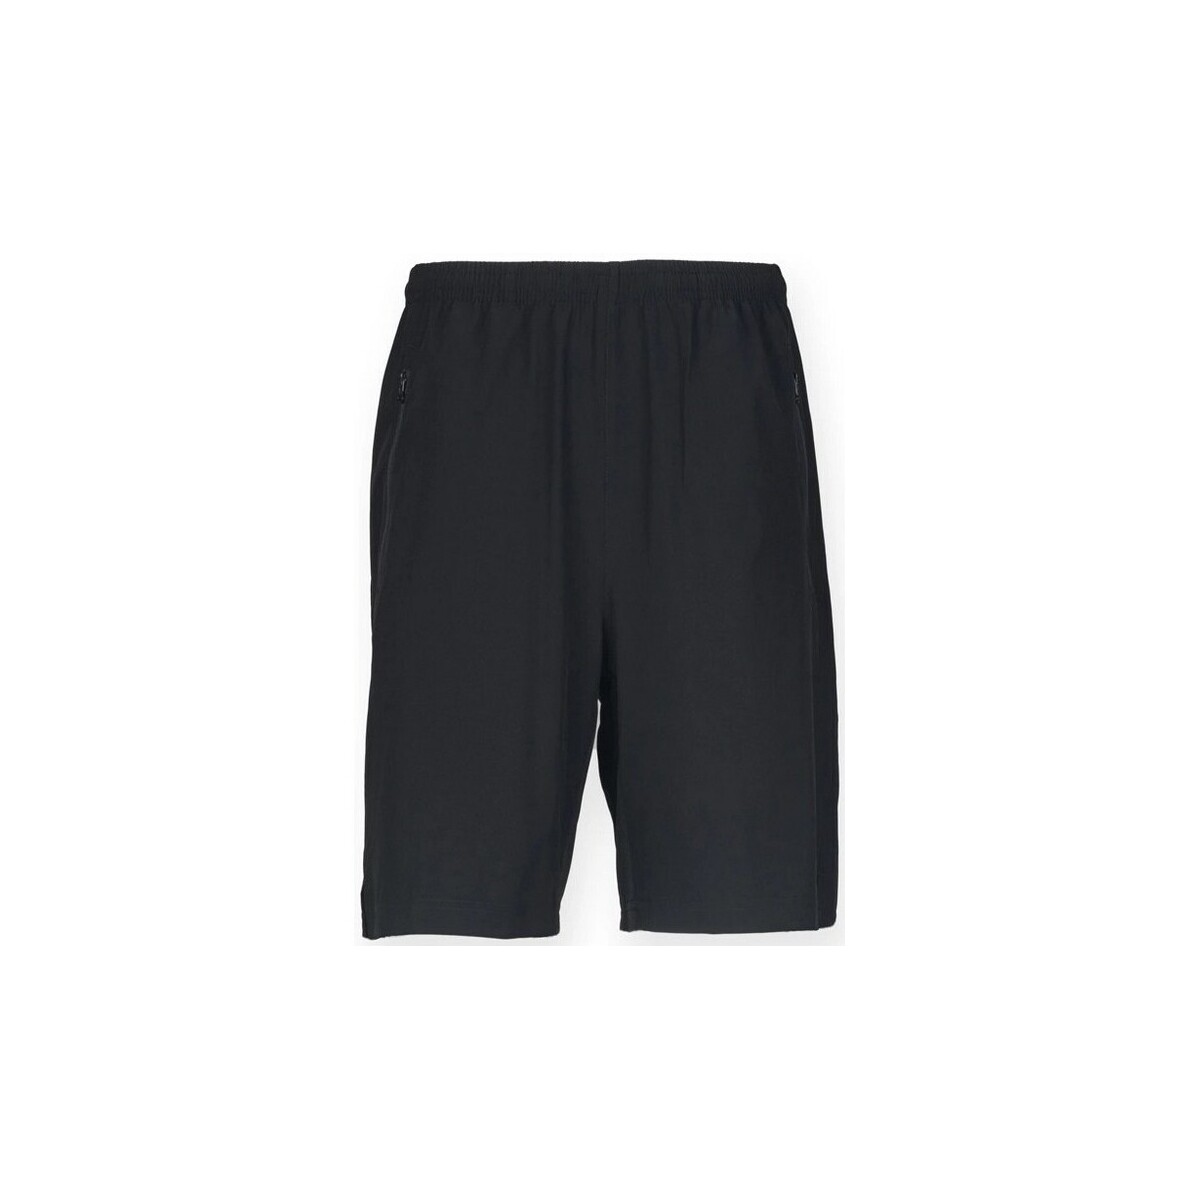 textil Hombre Shorts / Bermudas Finden & Hales Pro Negro